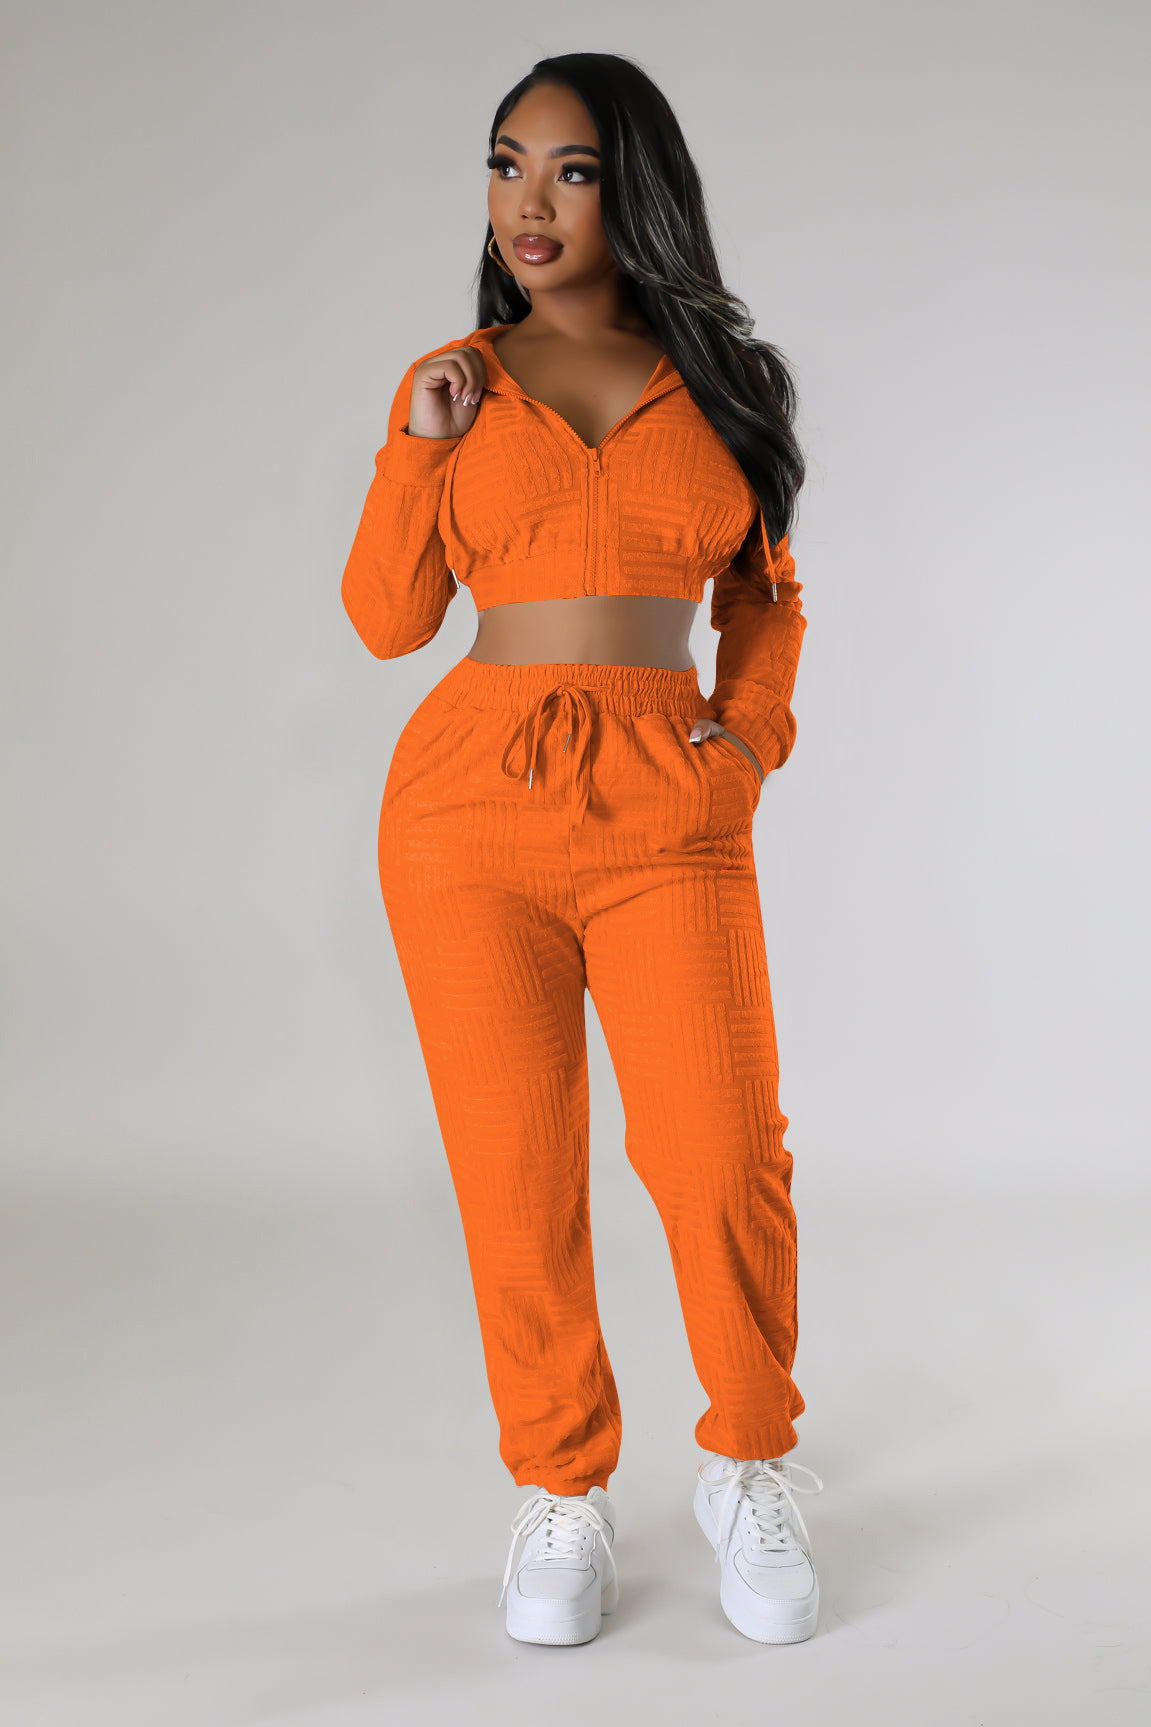 BamBam Women's Clothing Fashionable Solid Jacquard Zipper Hoodie Sweatpants Two-Piece Set - BamBam